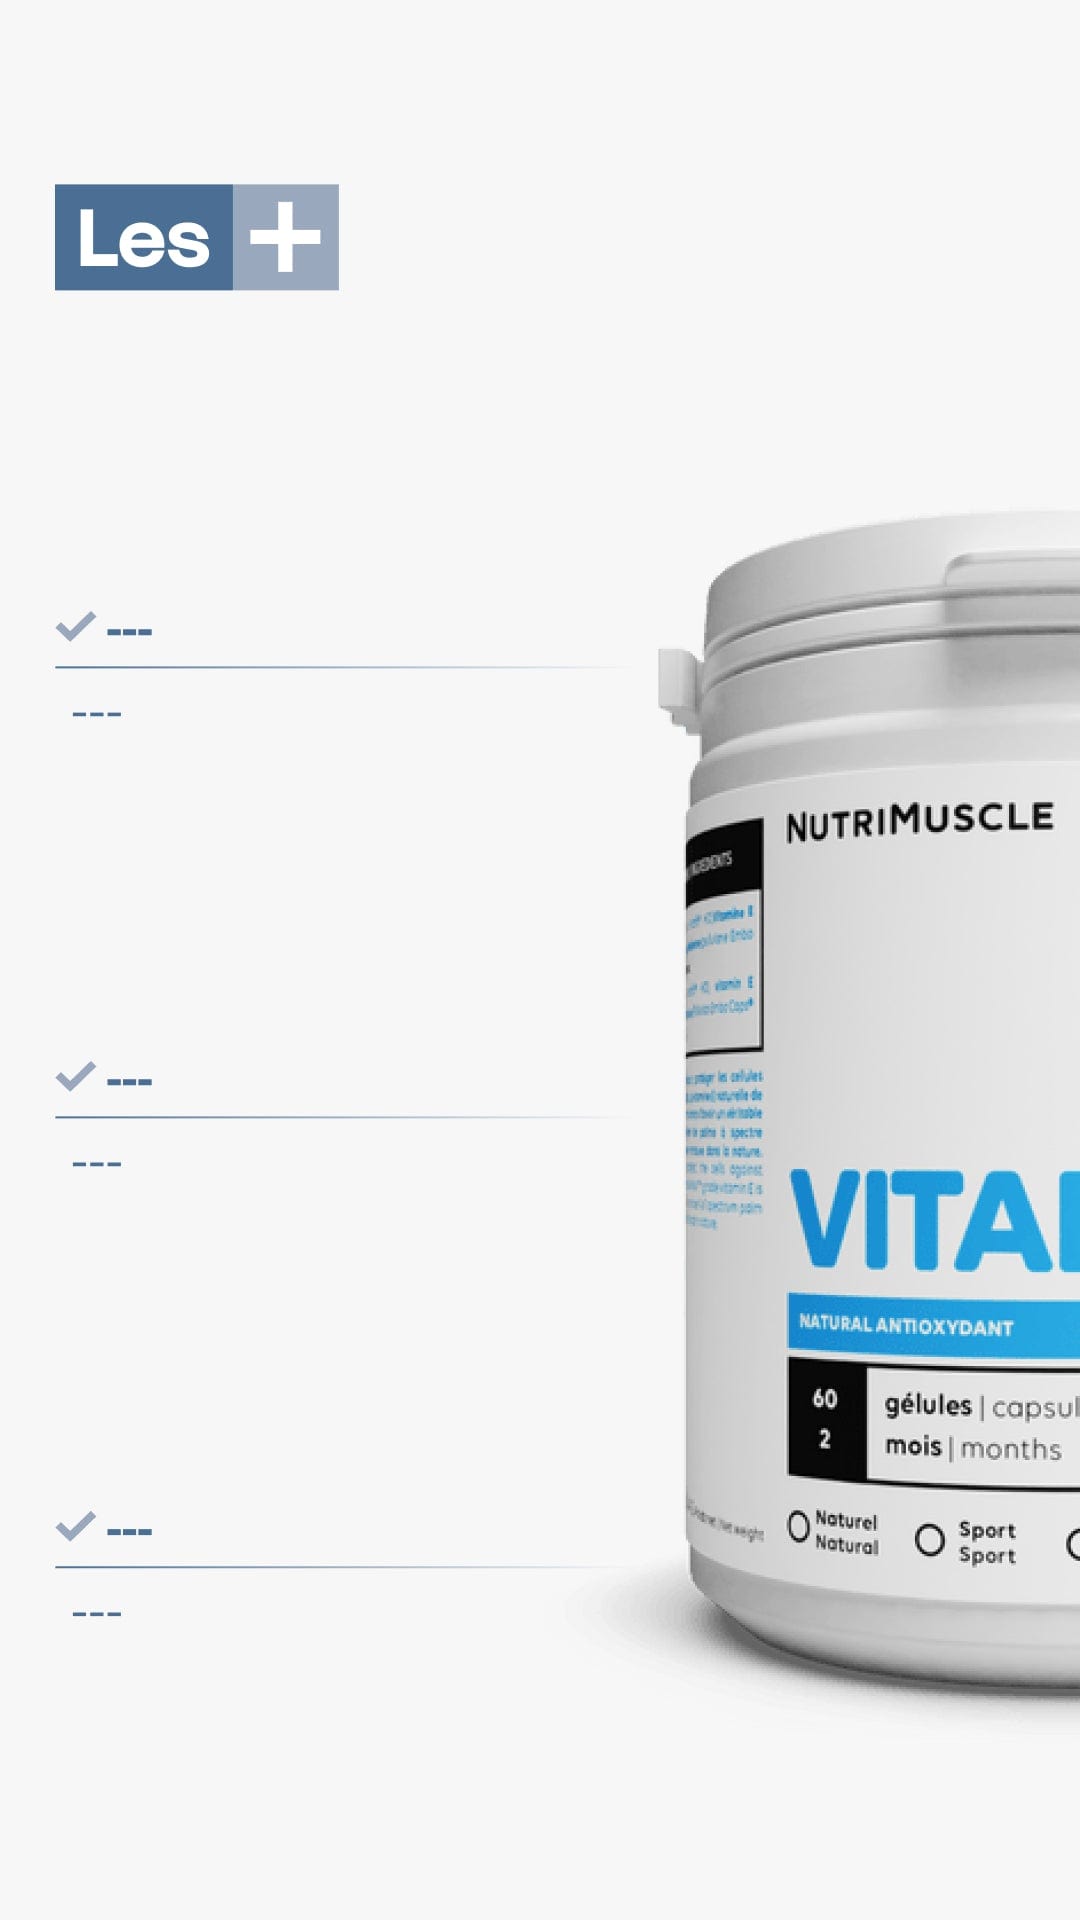 Nutrimuscle Vitamines Vitamine E naturelle